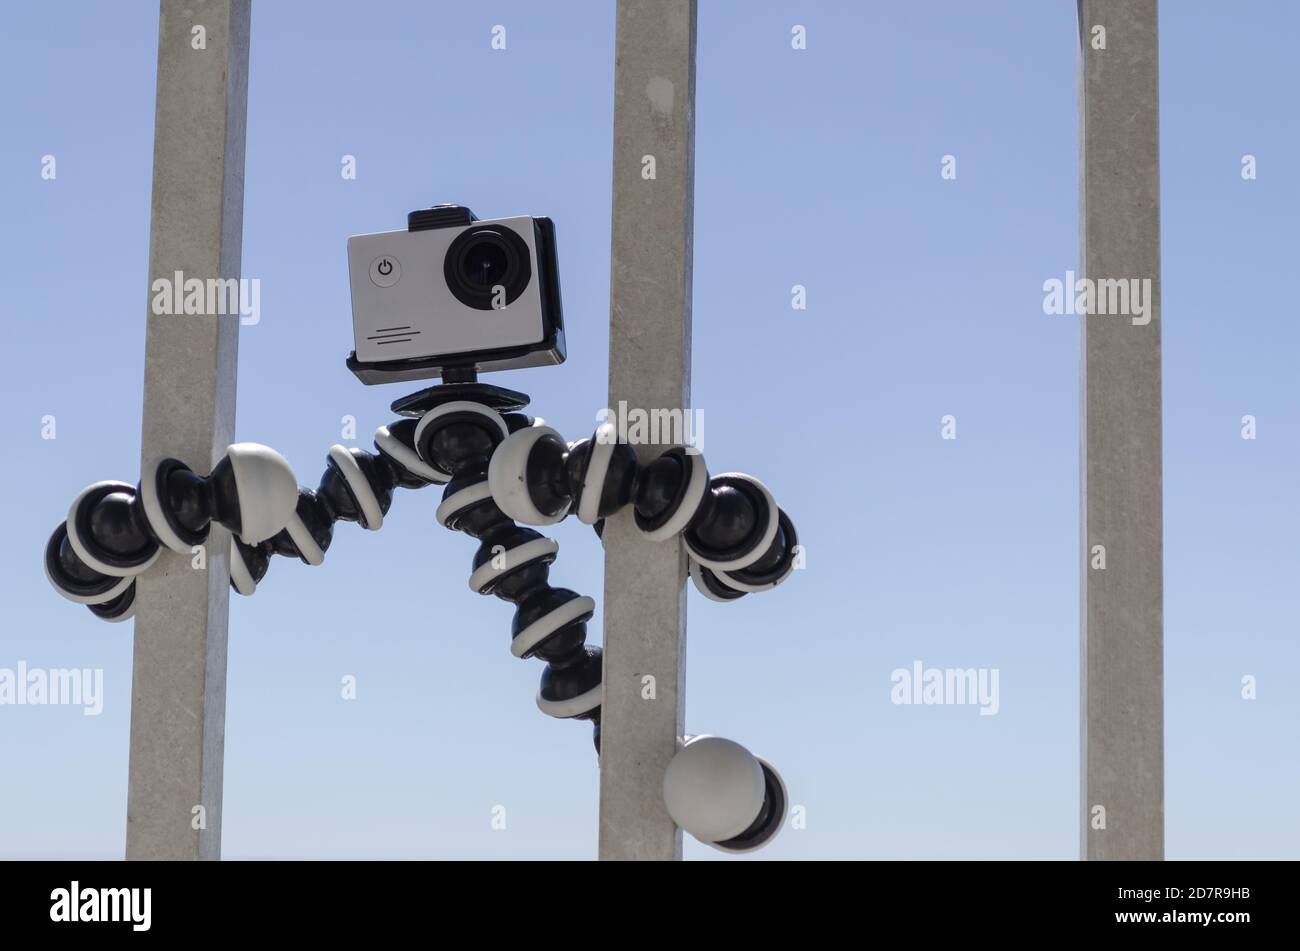 Action camera with a gorilla tripod Stock Photo